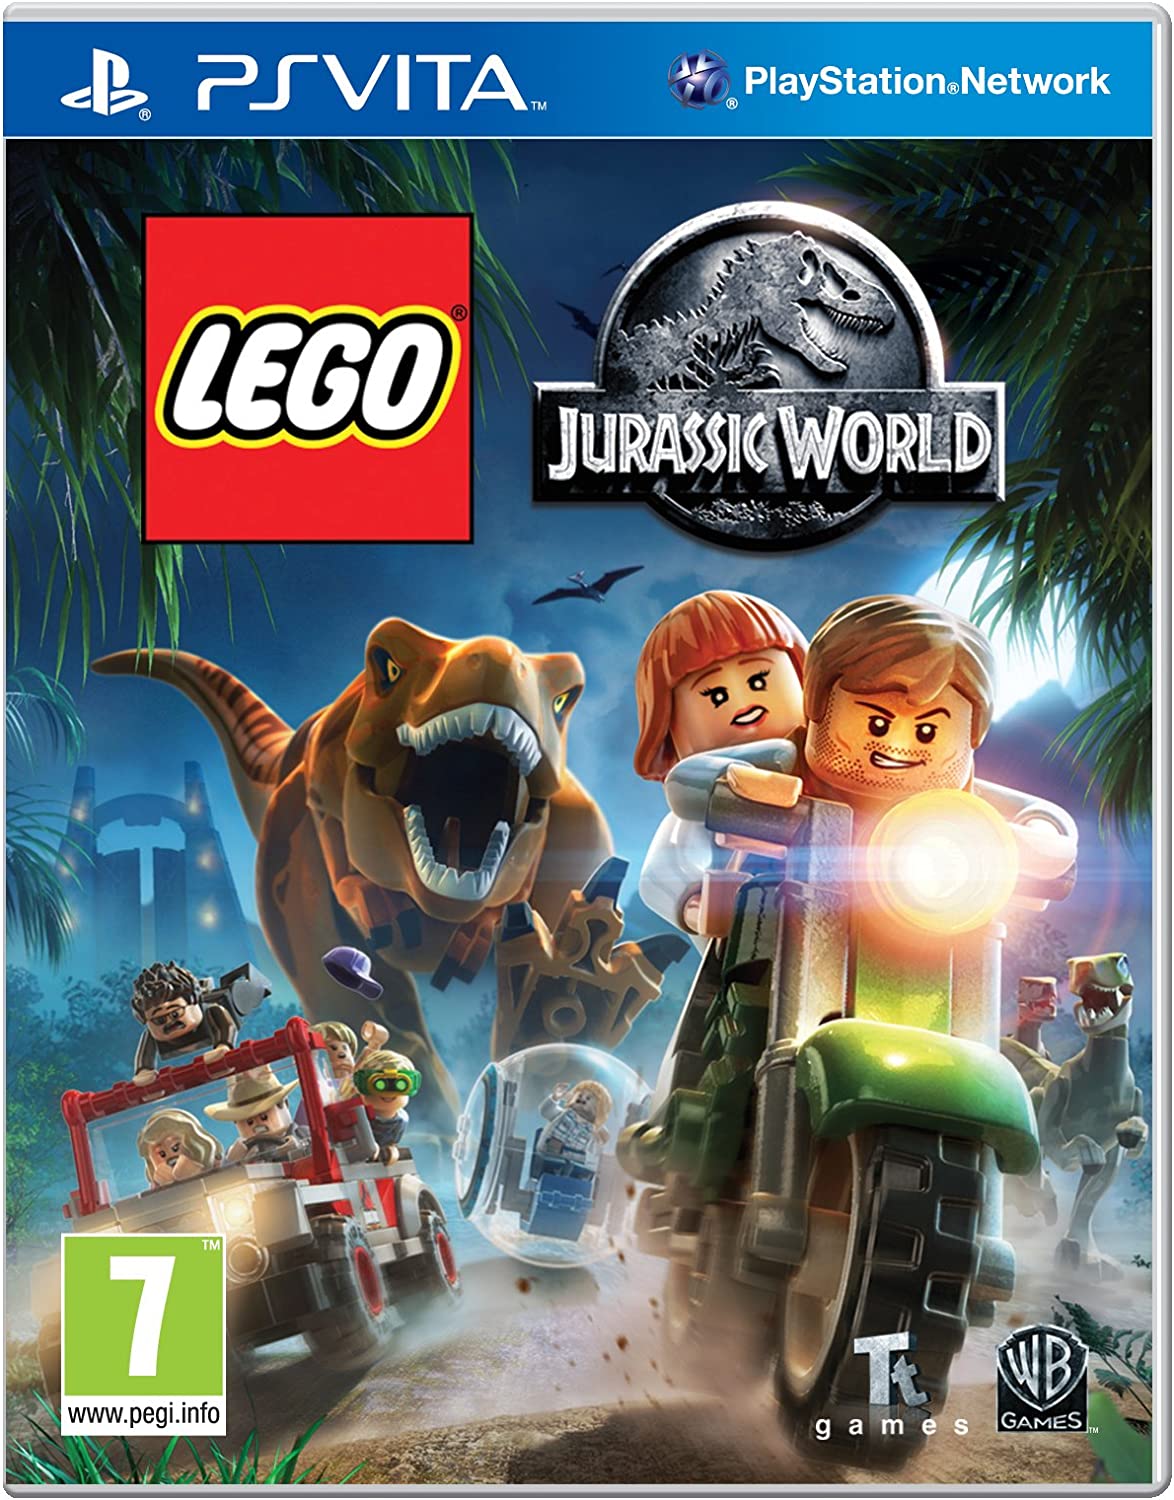 LEGO Jurassic World - USED (PS Vita)